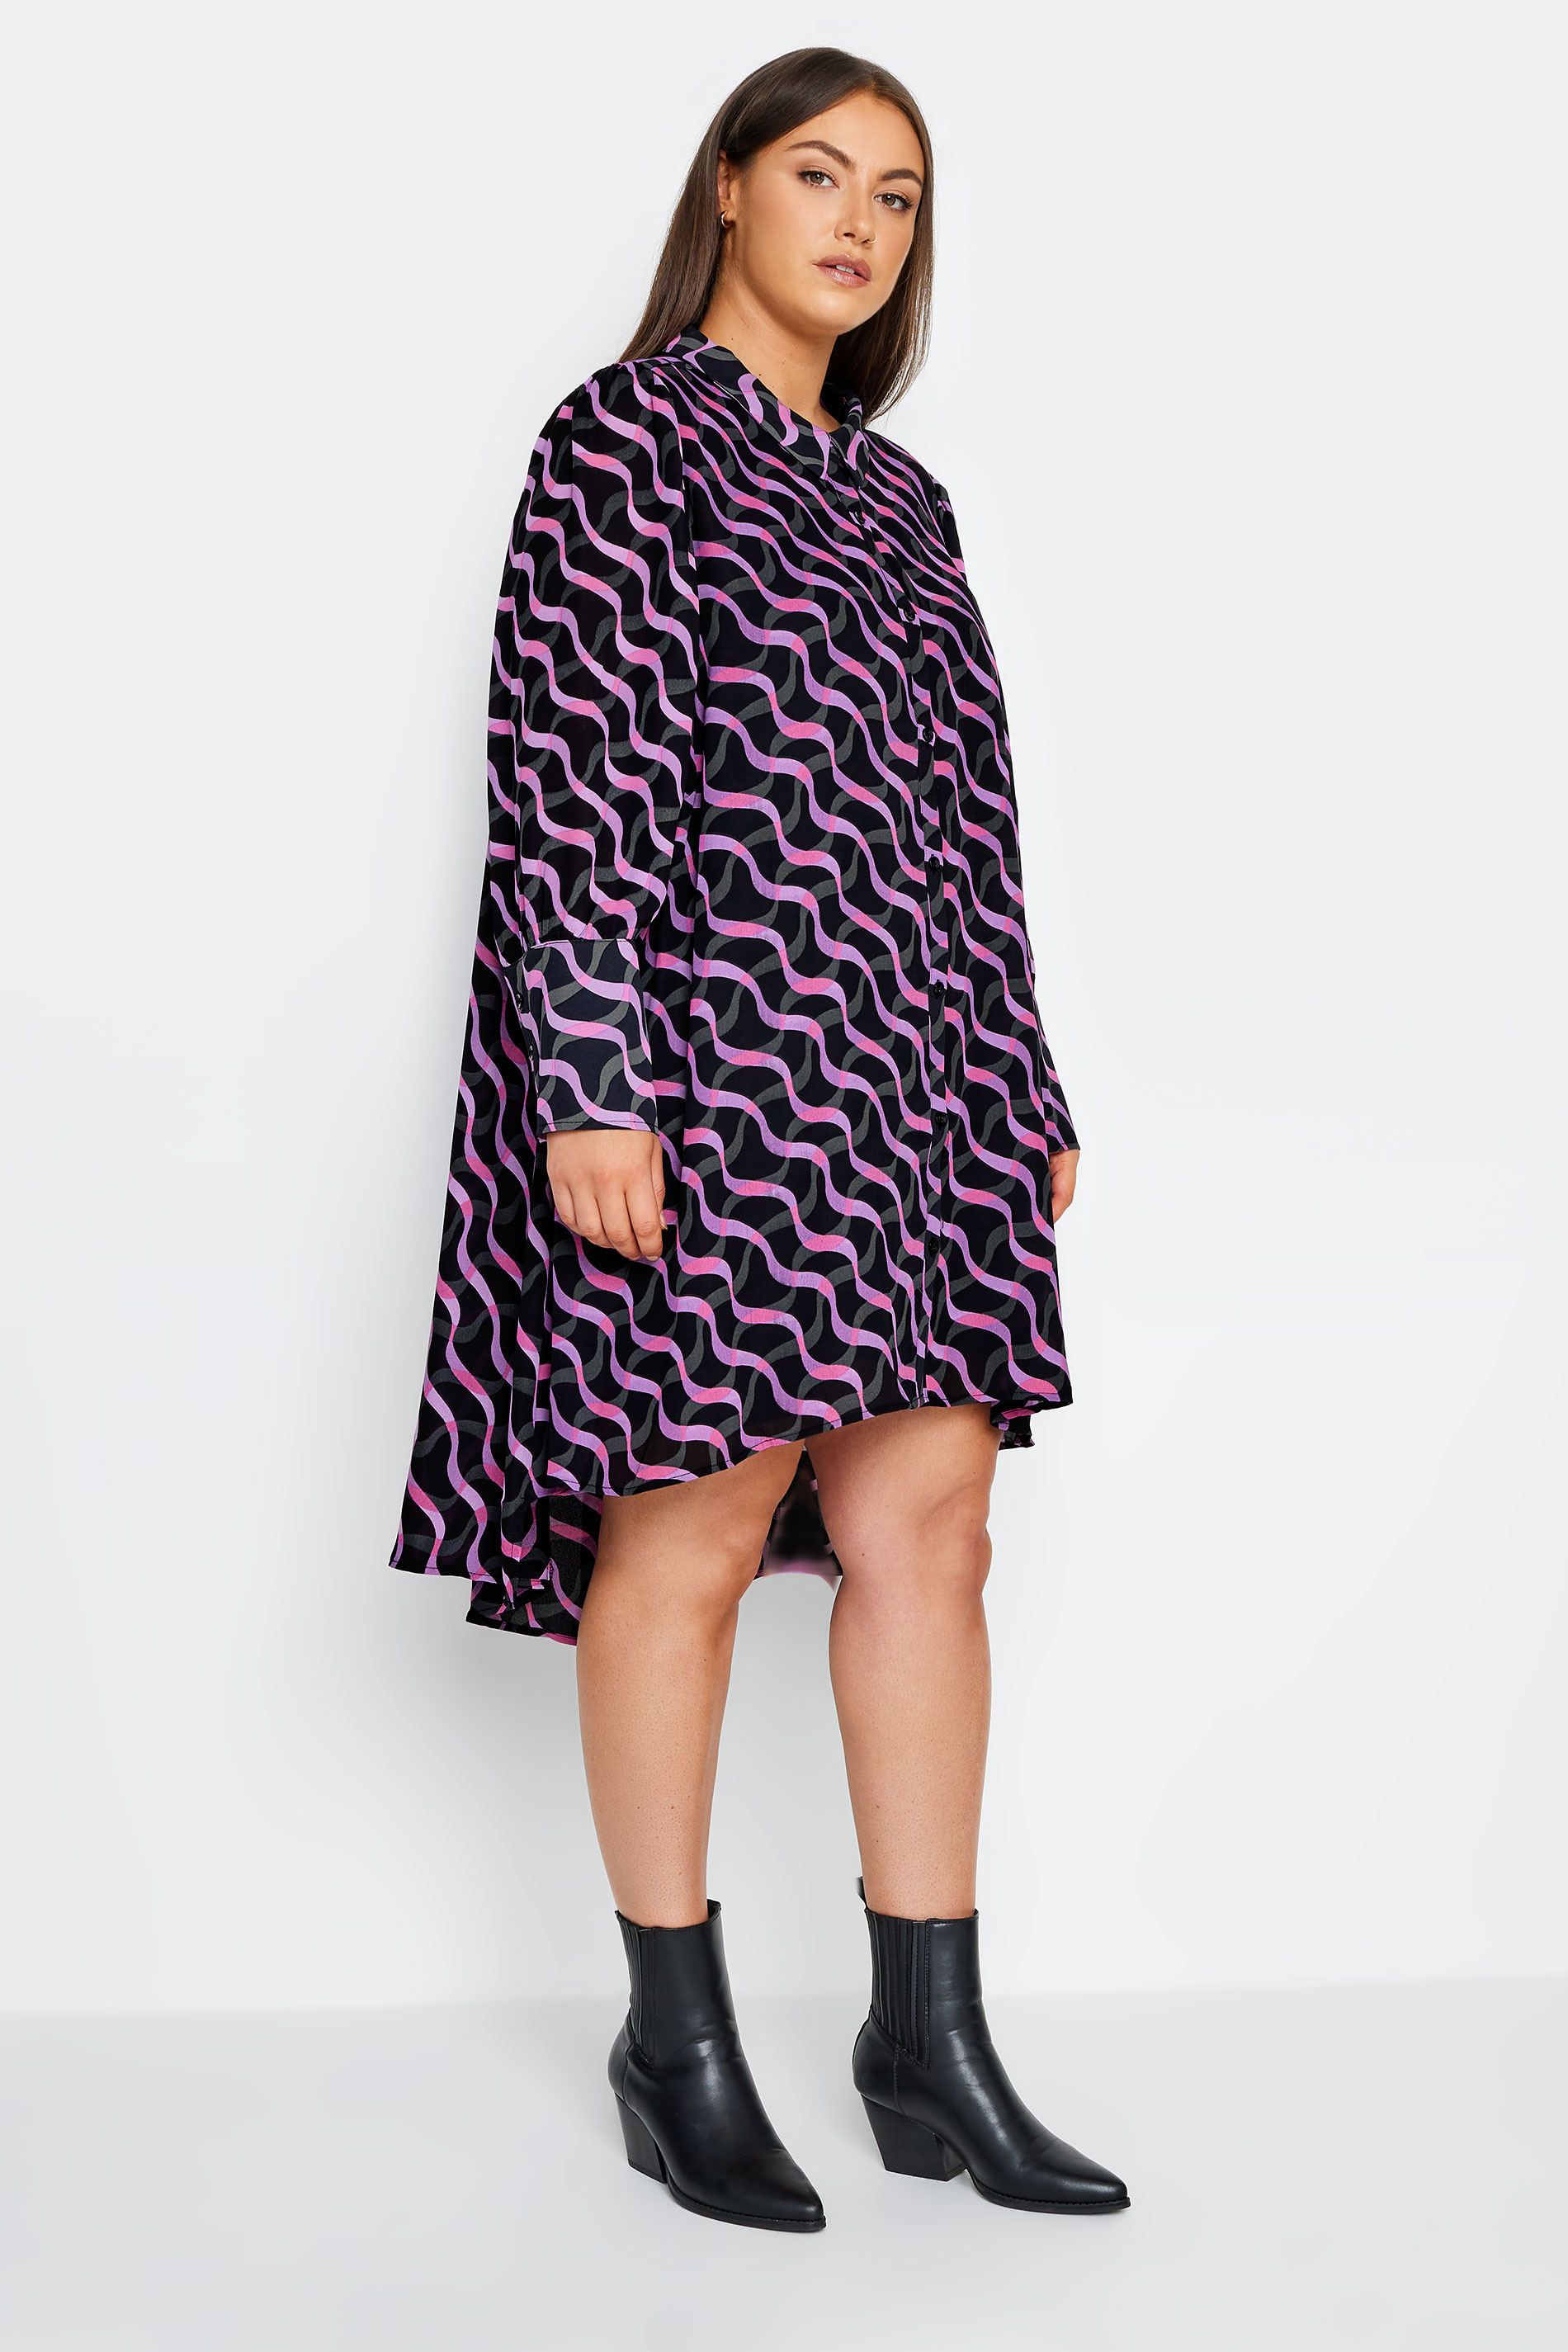 Evans Black & Purple Swirl Print Shirt Dress 2